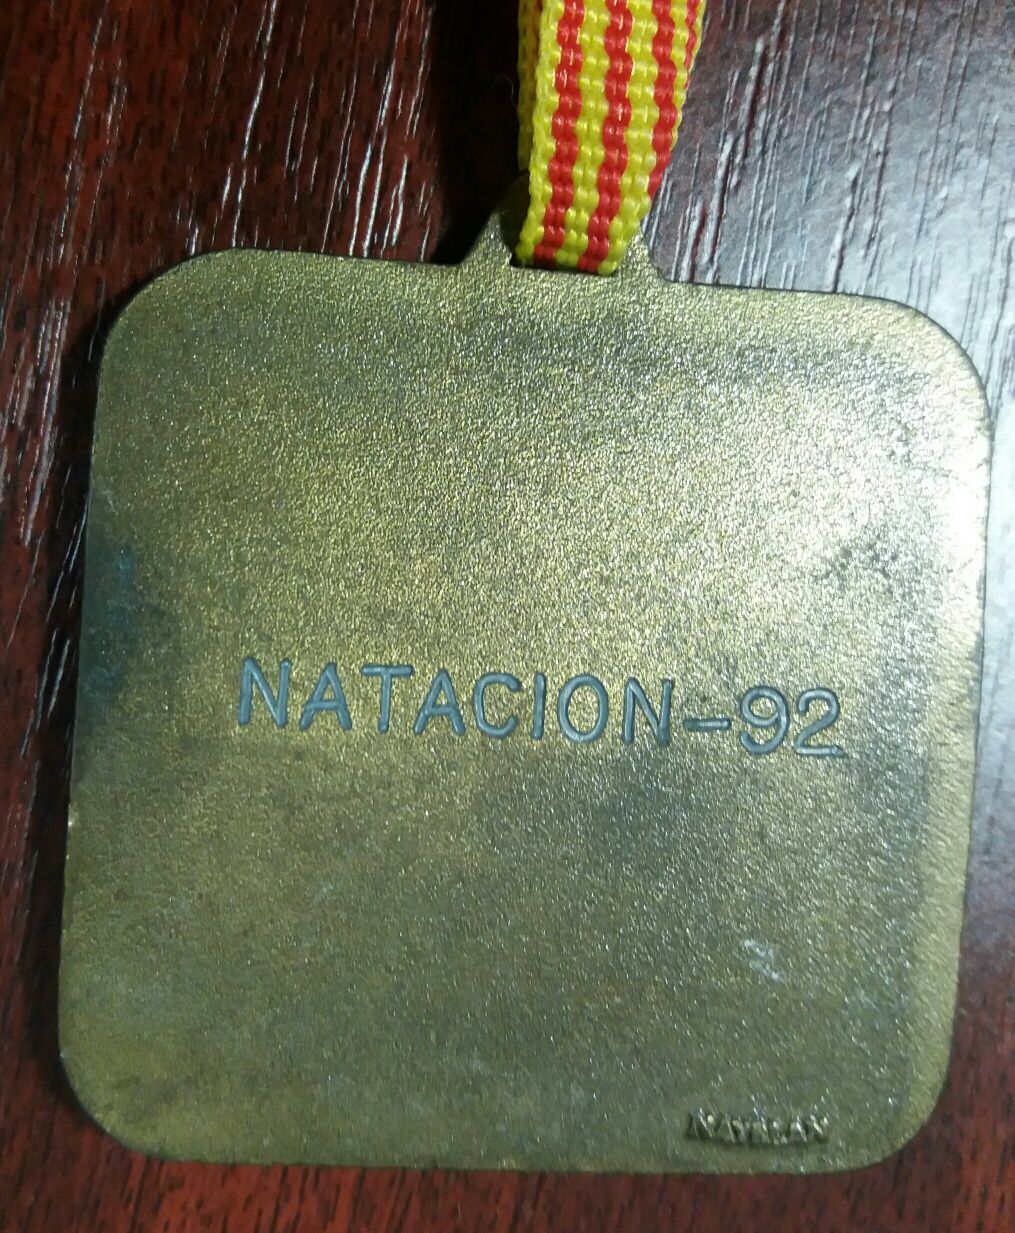 Medalie natatie